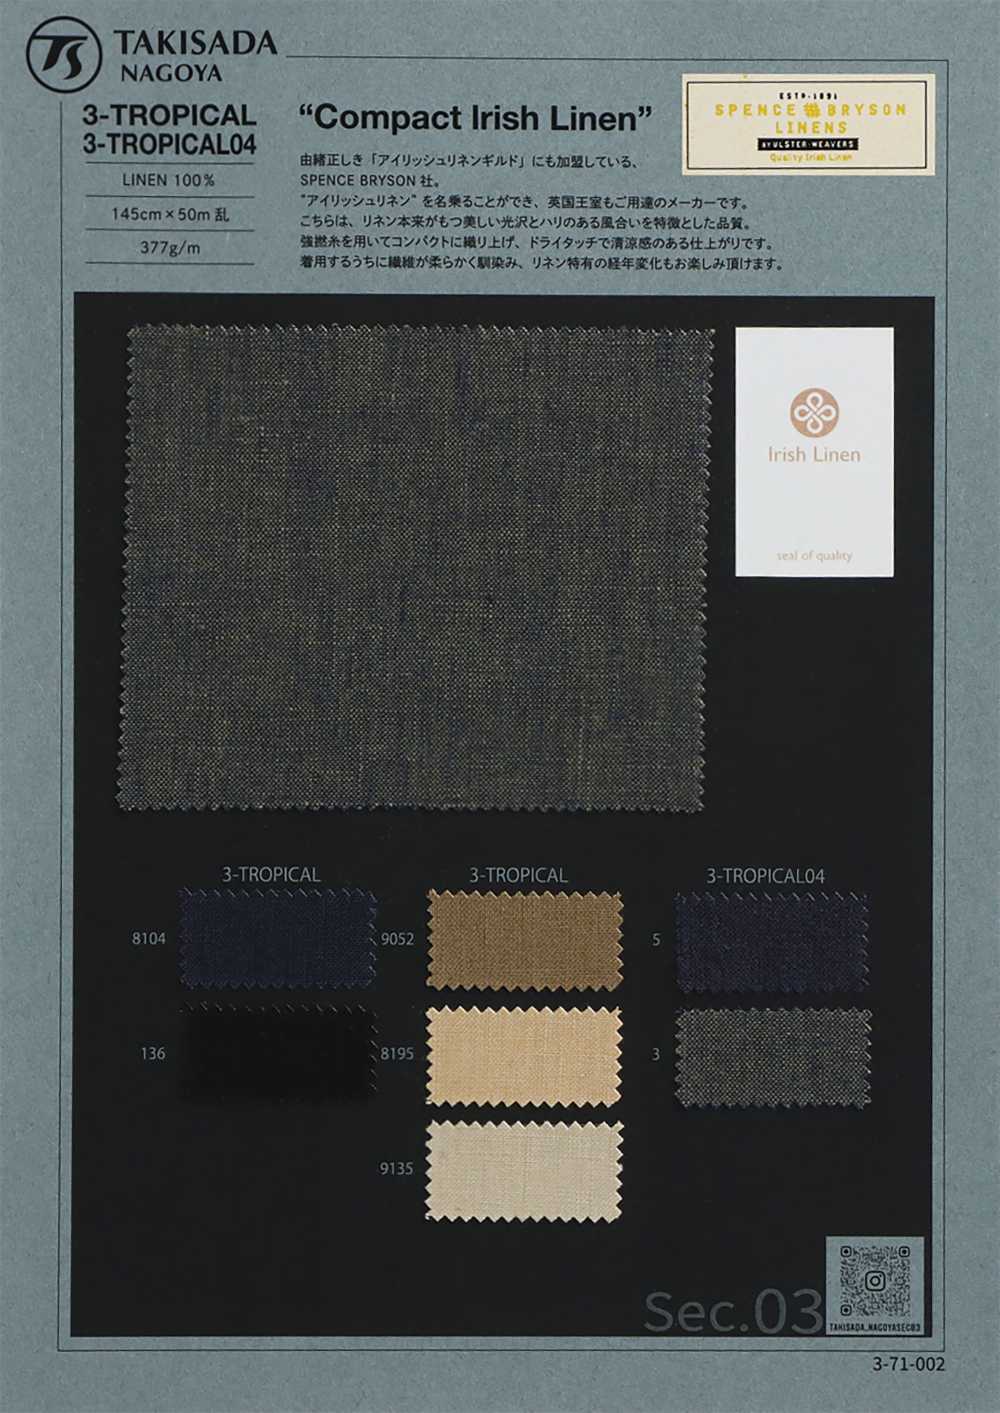 3-TROPICAL SPENCE BRYSON COMPACT LINO IRLANDÉS LINO IRLANDÉS Lino Irlandés Lino Tropical Fuerte Twisted Yarn Co[Fabrica Textil] Takisada Nagoya